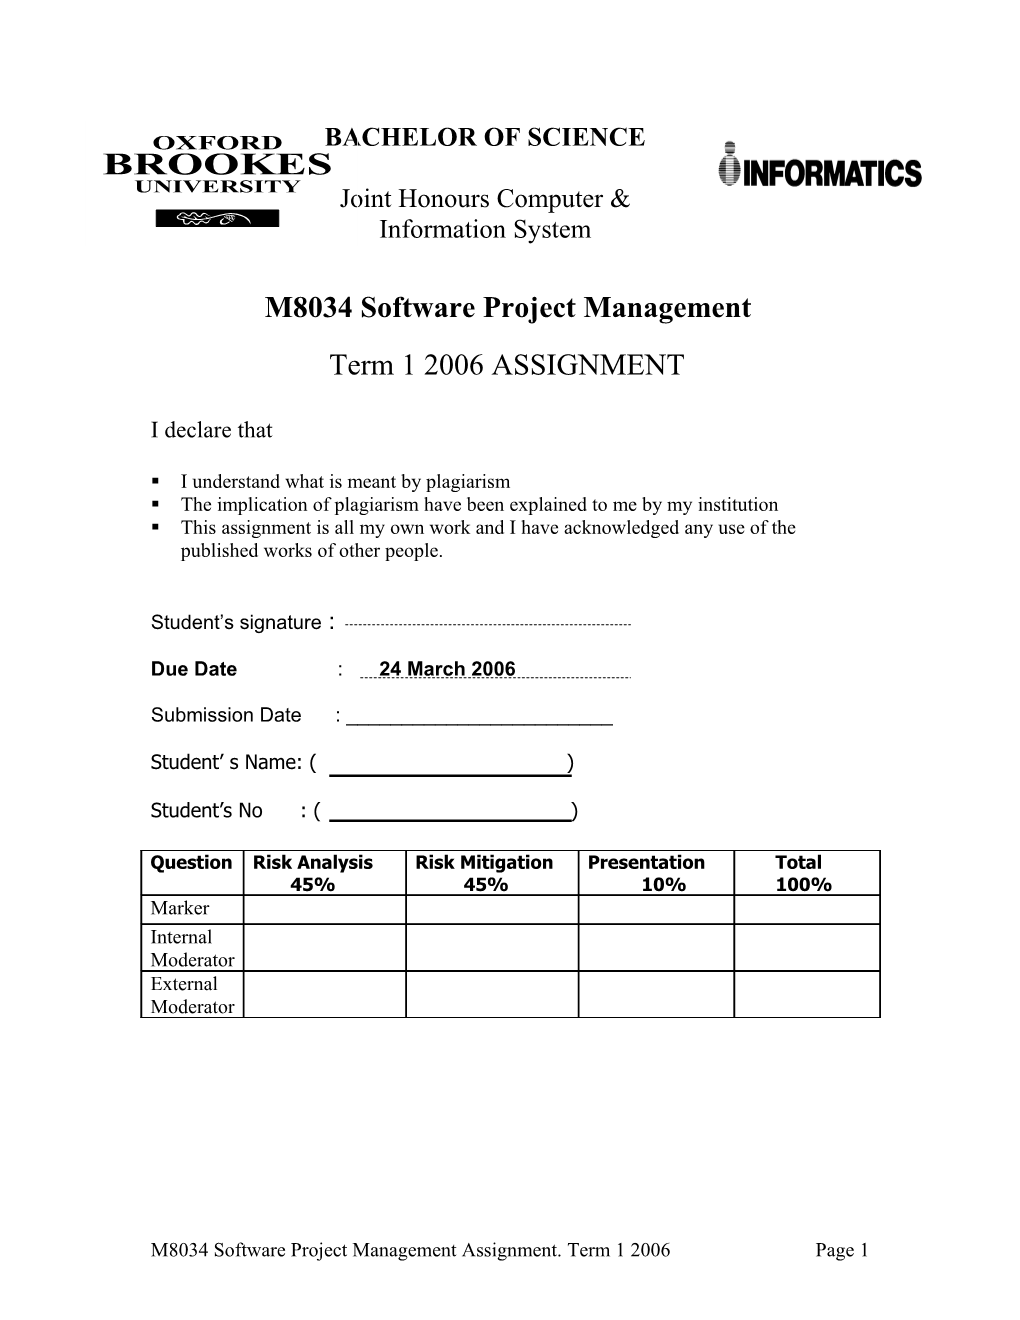 M8034 Software Project Management